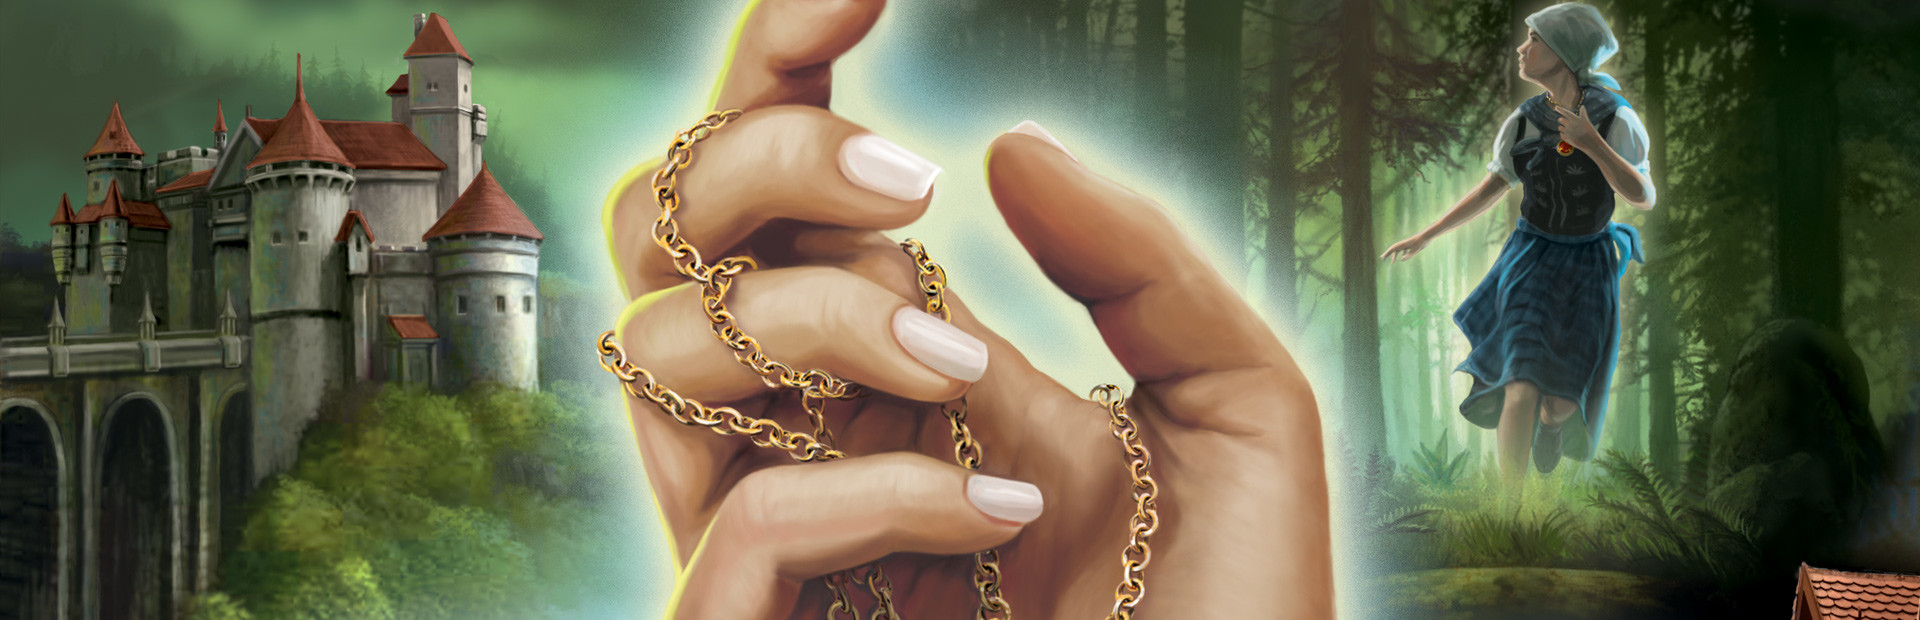 Nancy Drew®: The Captive Curse cover image